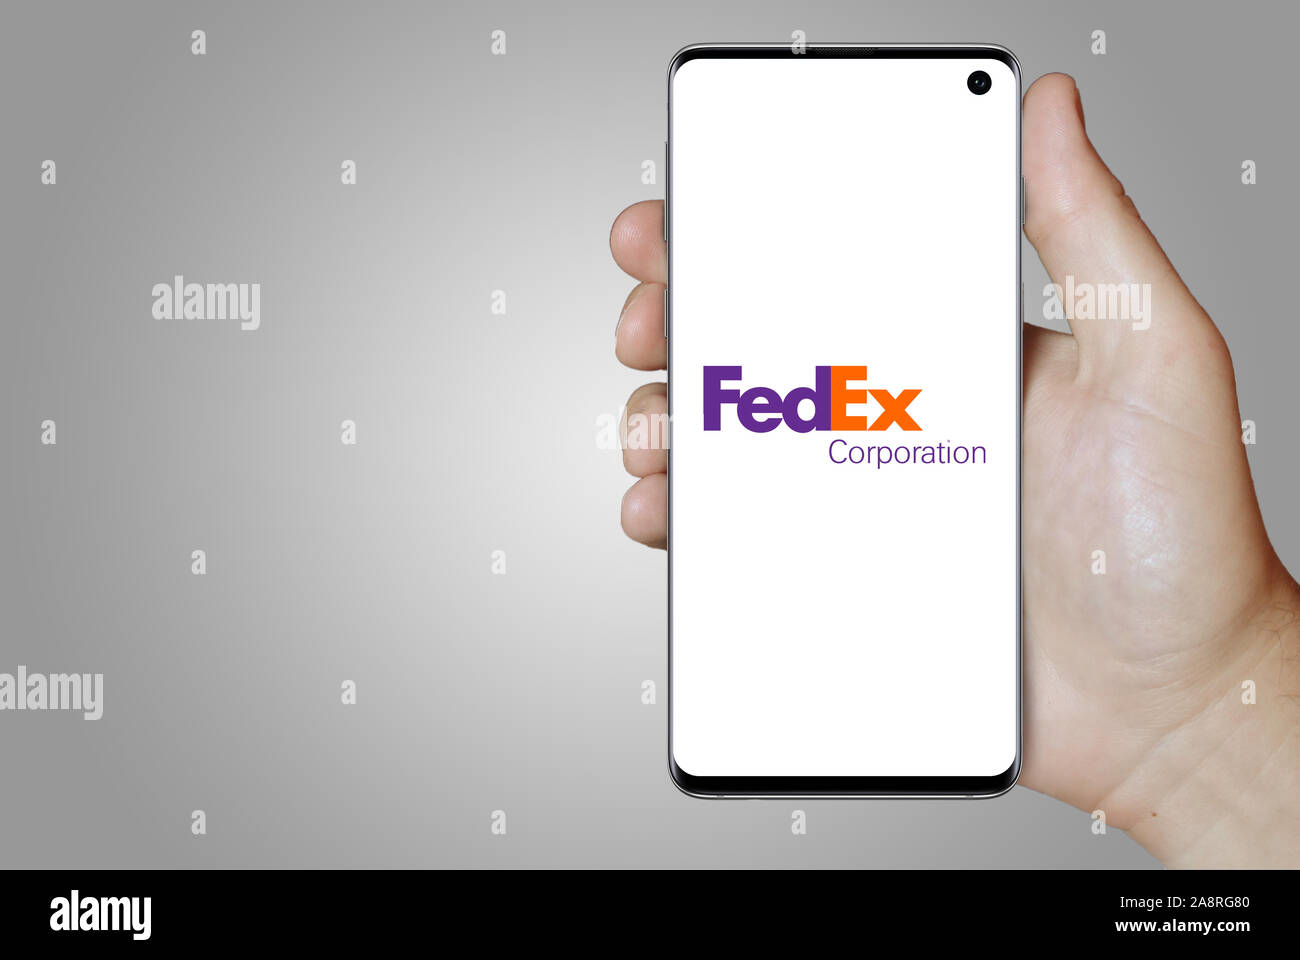 Logo of public company FedEx Corporation displayed on a smartphone. Grey background. Credit: PIXDUCE Stock Photo